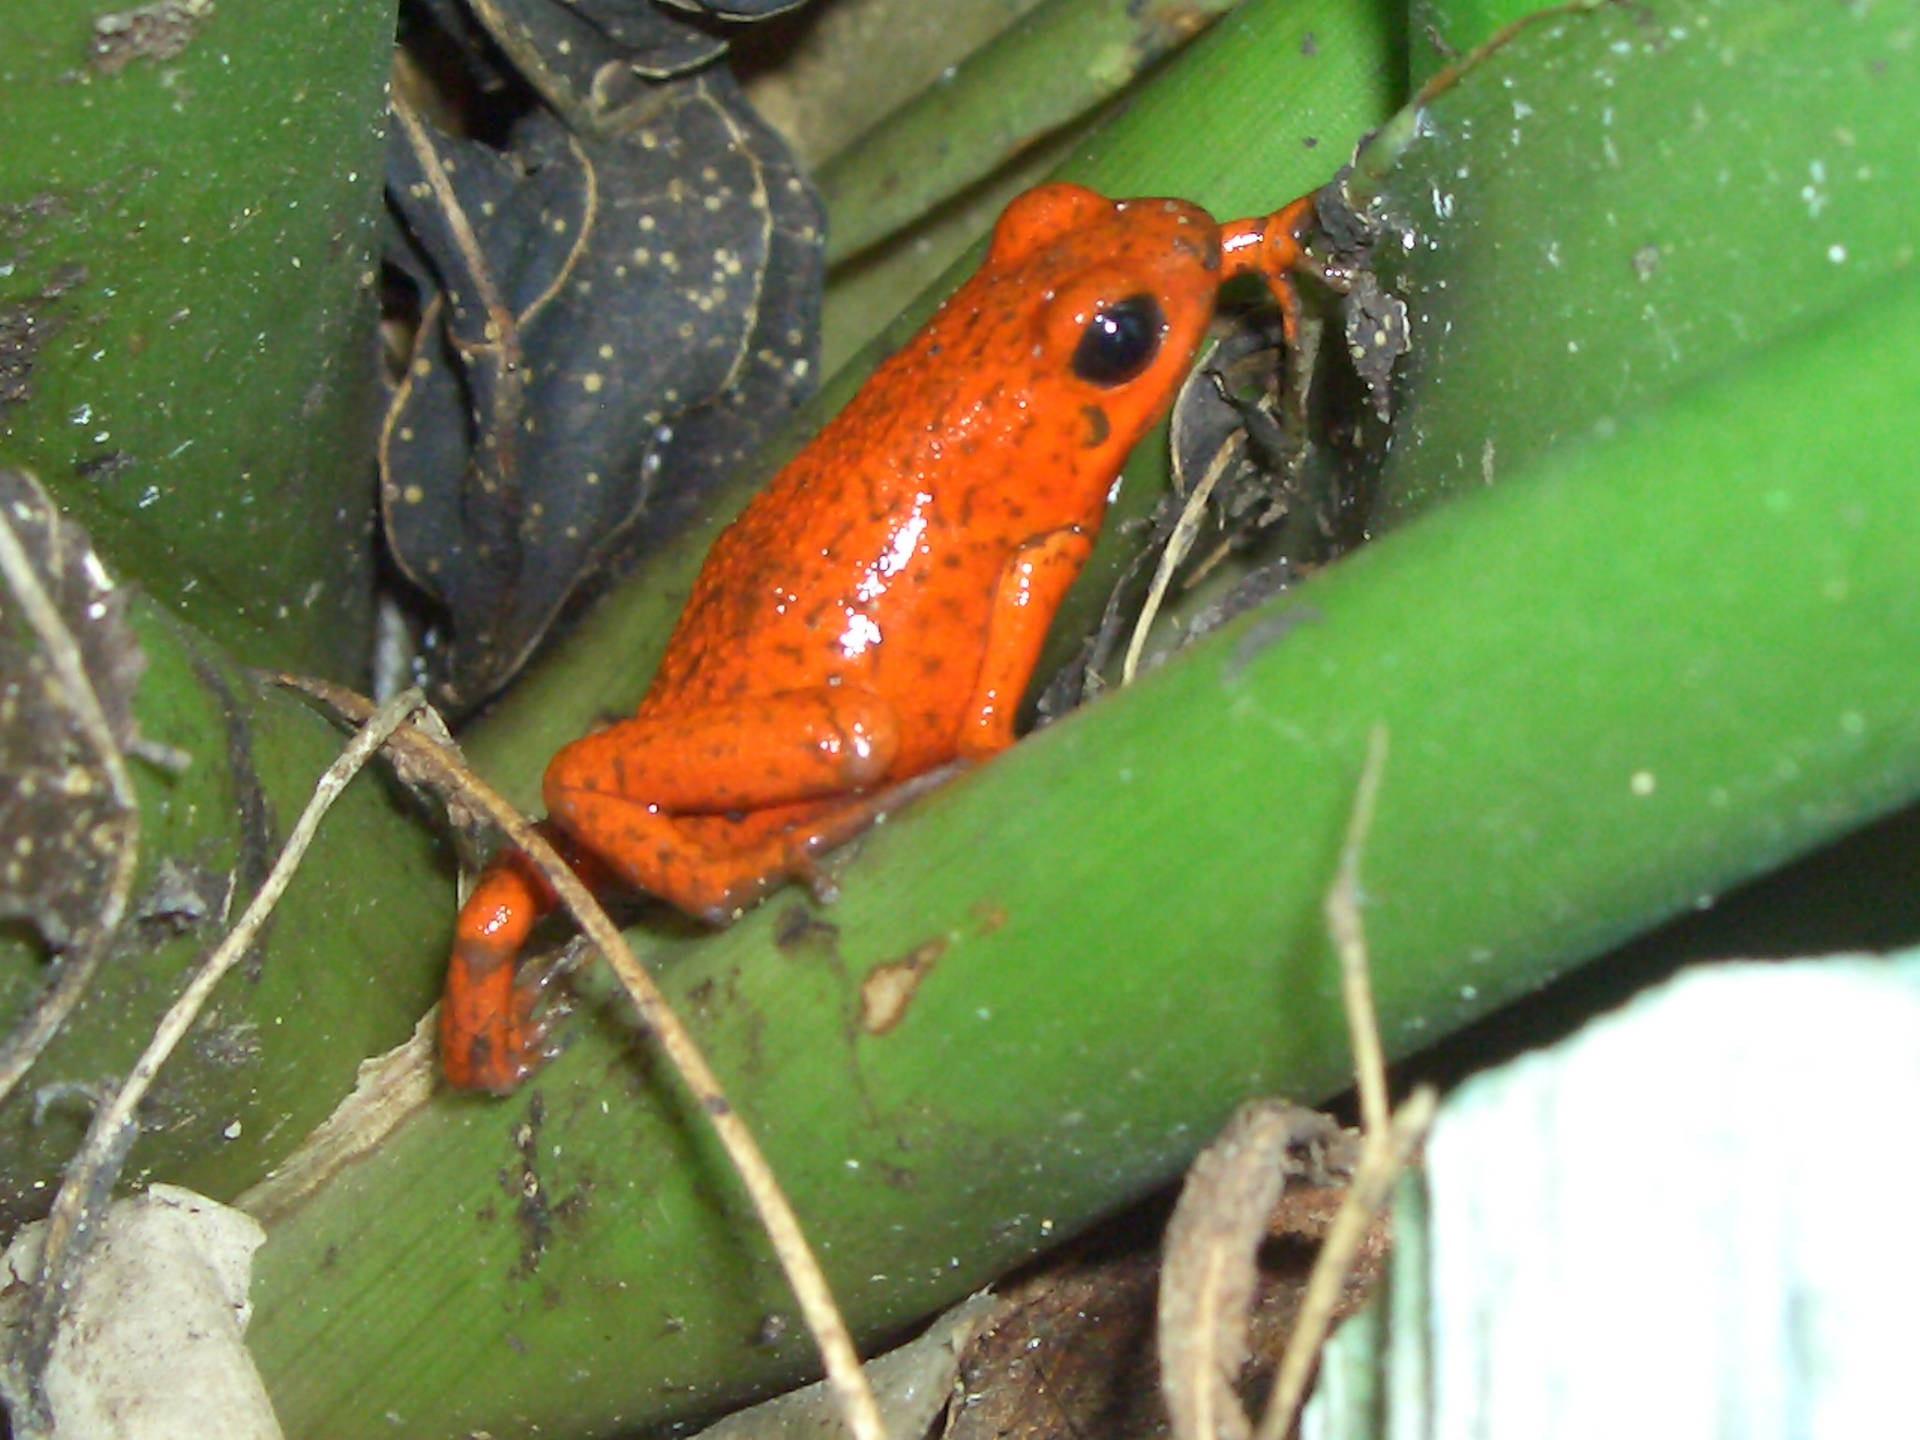 Cute Frog With Bright Orange Skin